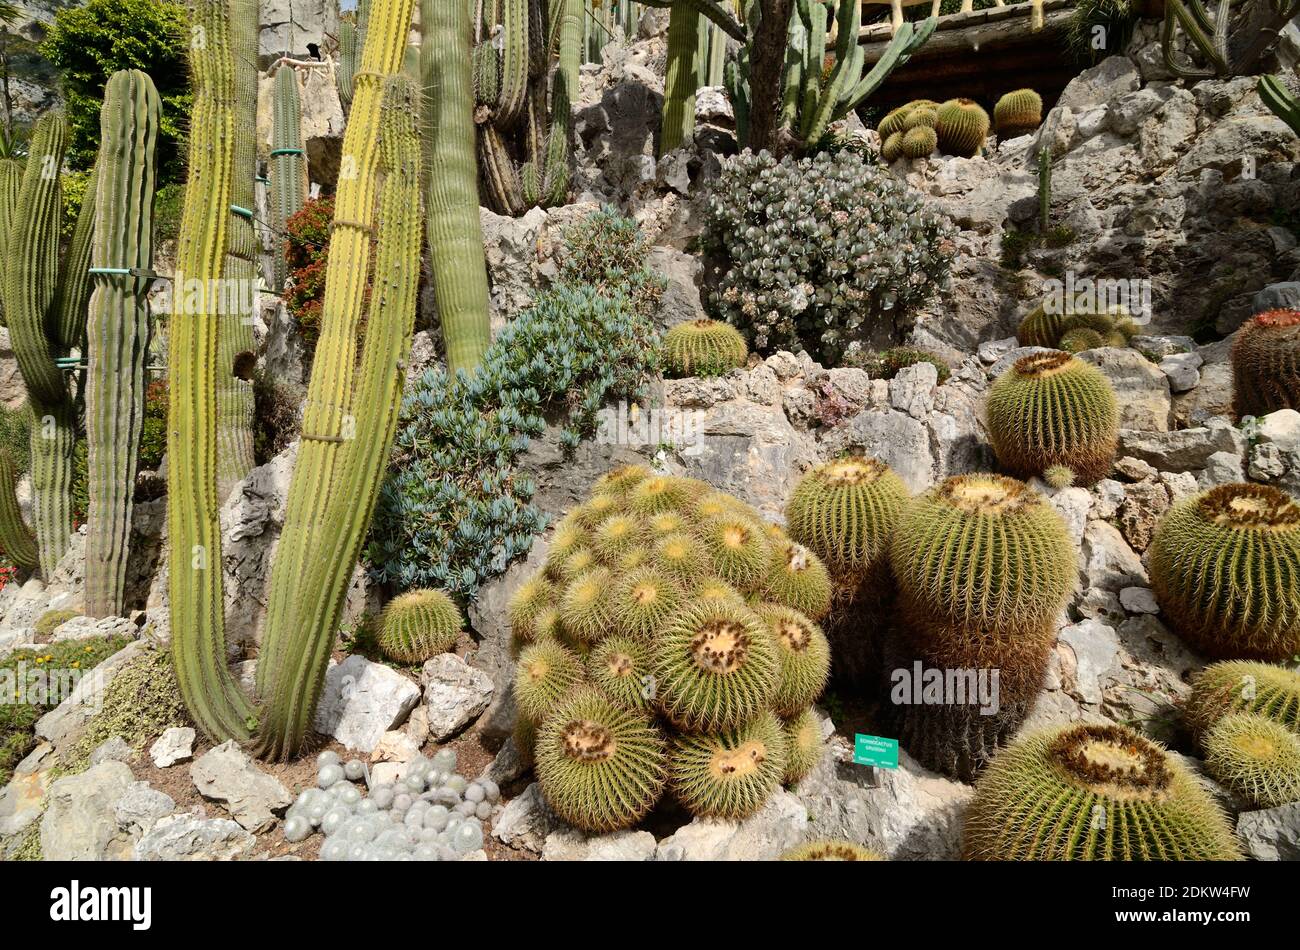 Display of Cactus, Cacti and Succulents in the Jardin Exotique de Monaco, Exotic Garden or Botanical Garden Monaco Stock Photo